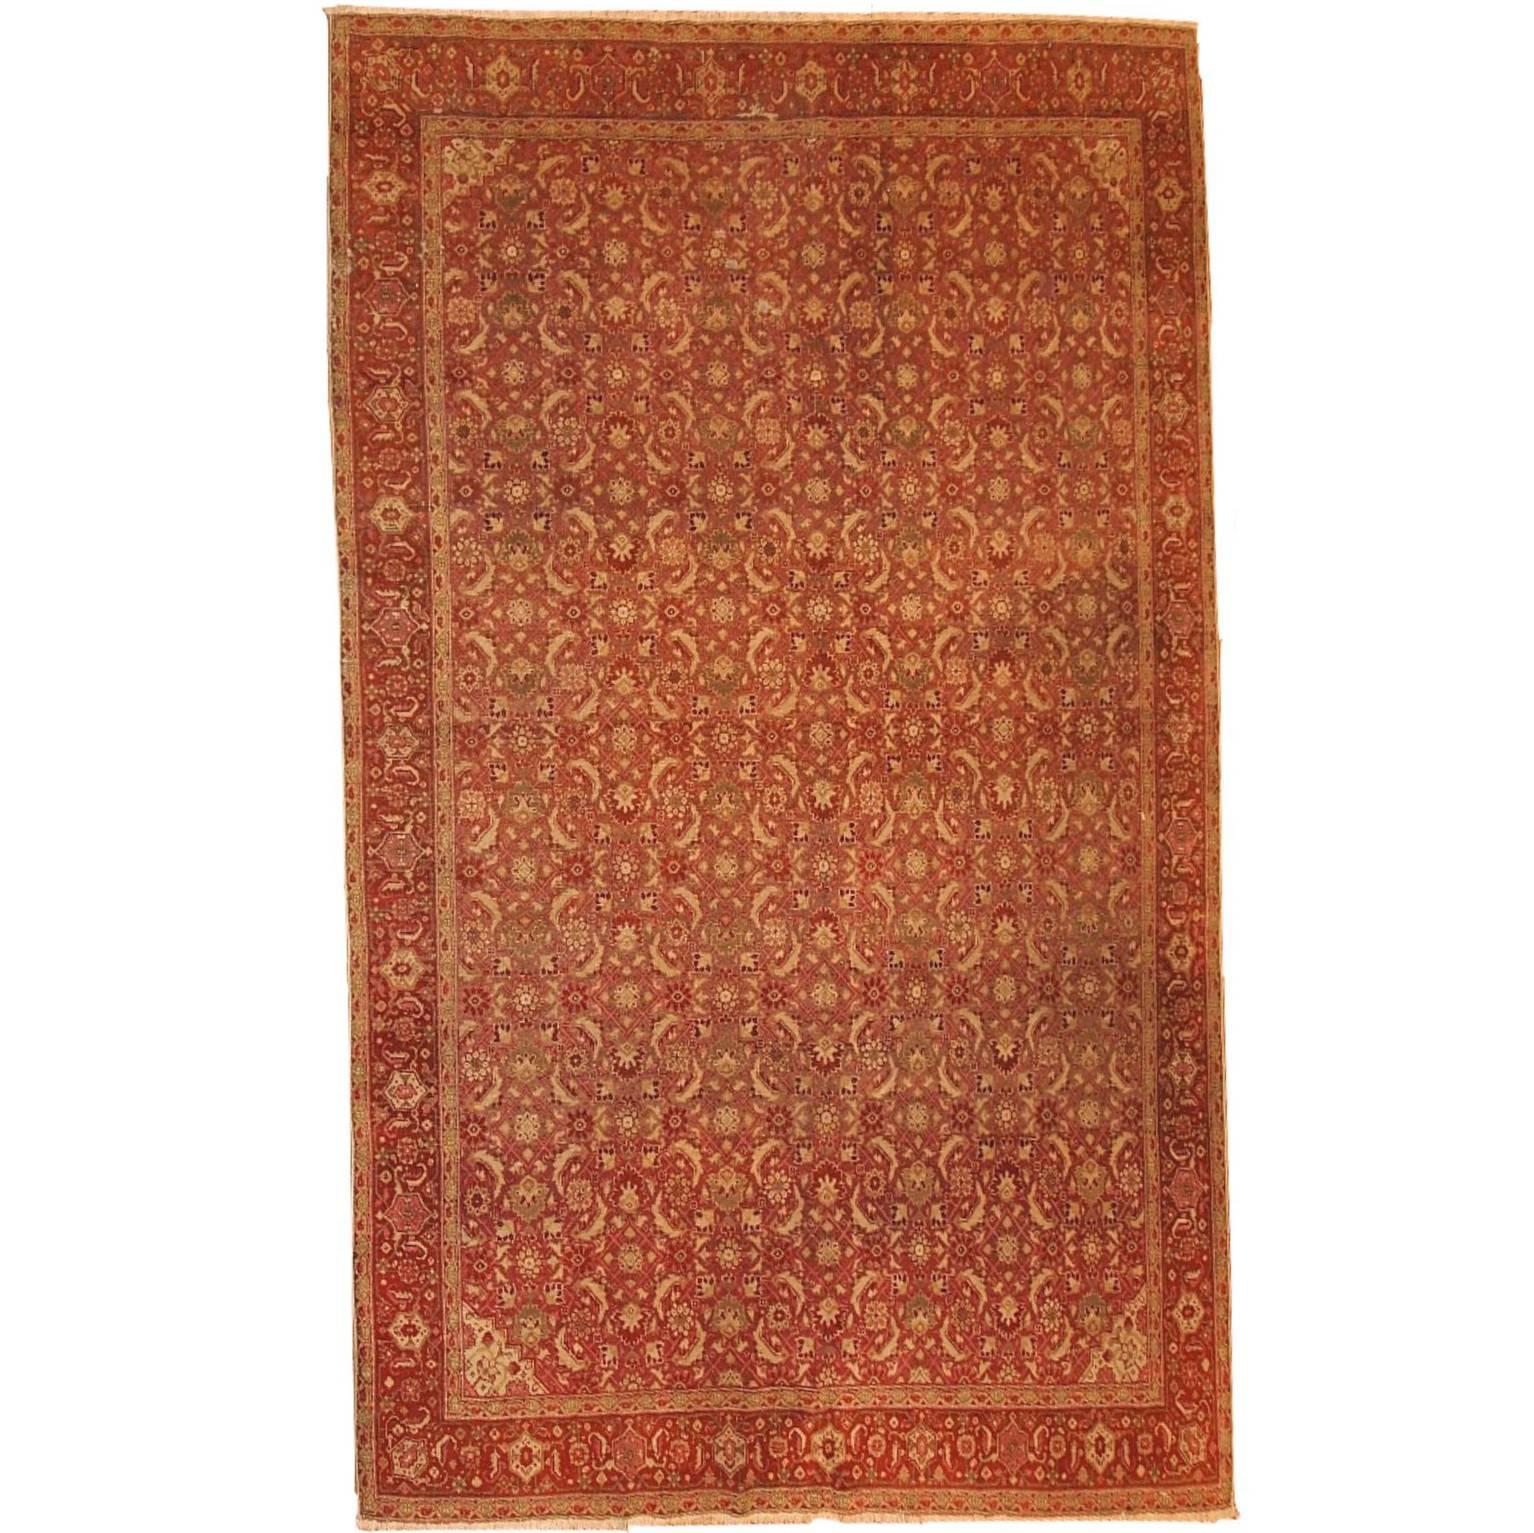 Handmade Antique Indian Amritsar Oriental Rug, 1900s, 1B147